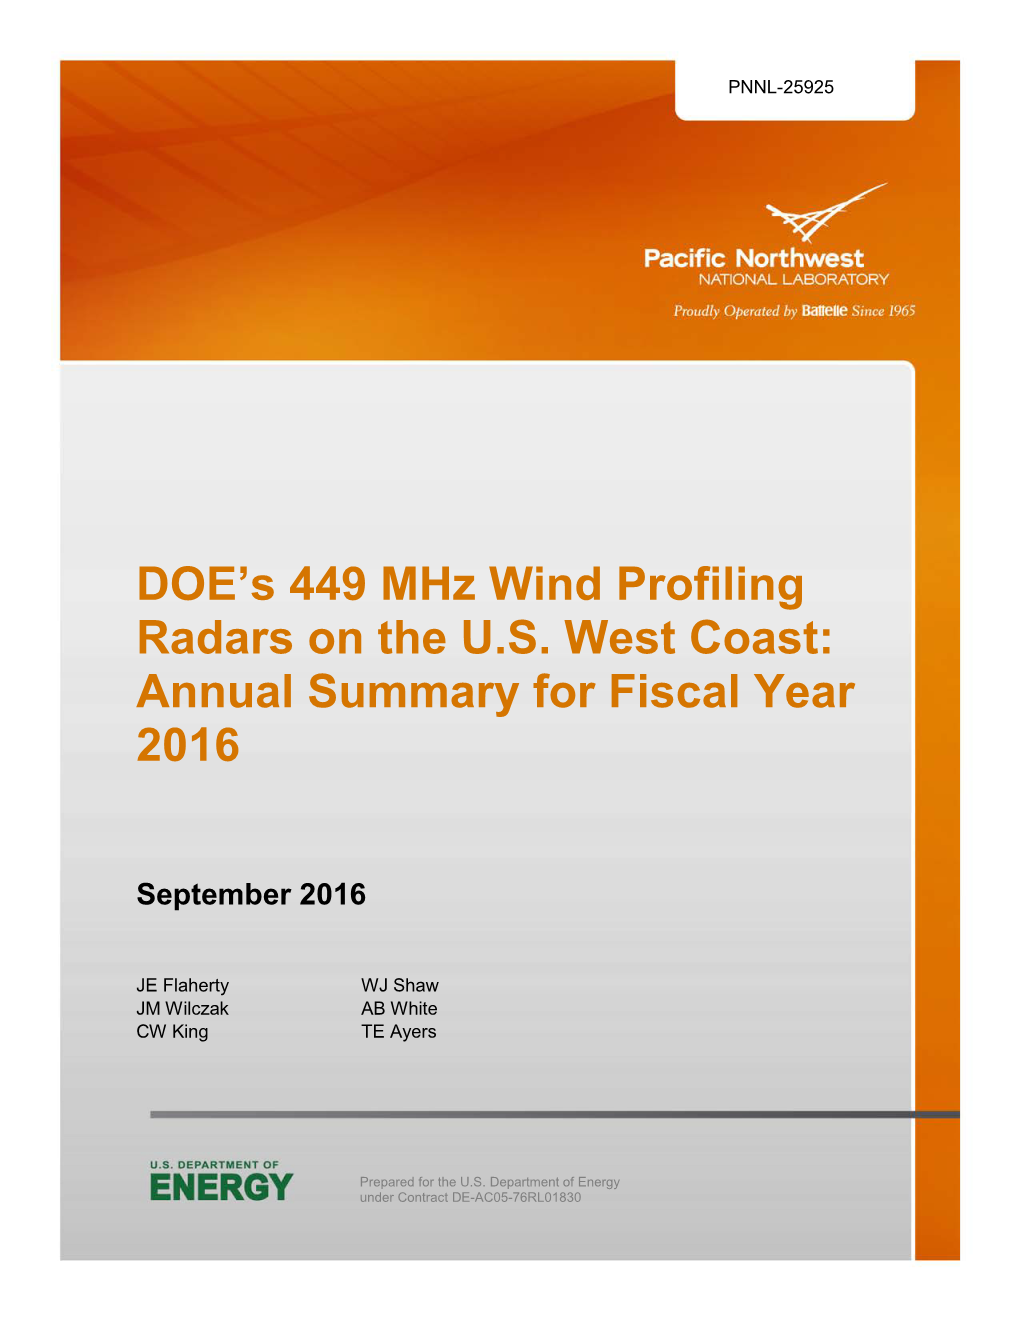 DOE's 449 Mhz Wind Profiling Radars on the US West Coast